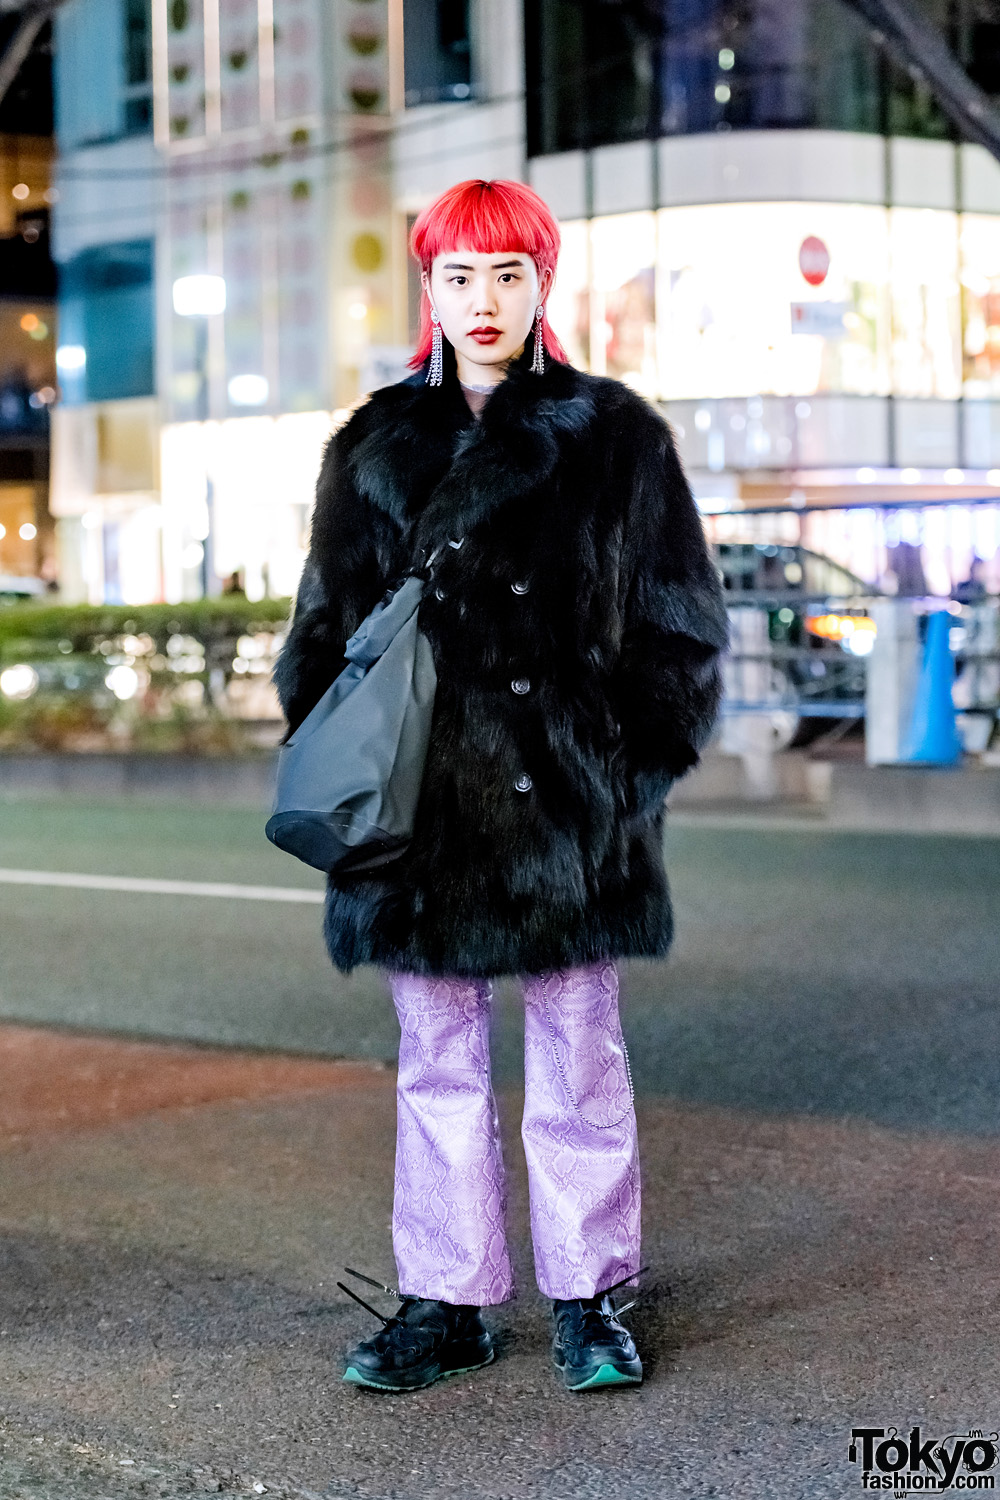 Red-Haired Harajuku Girl in Vintage Street Style w/ Faux Fur Jacket, Purple Snakeskin Pants, Alyx Bag & Eytys Sneakers